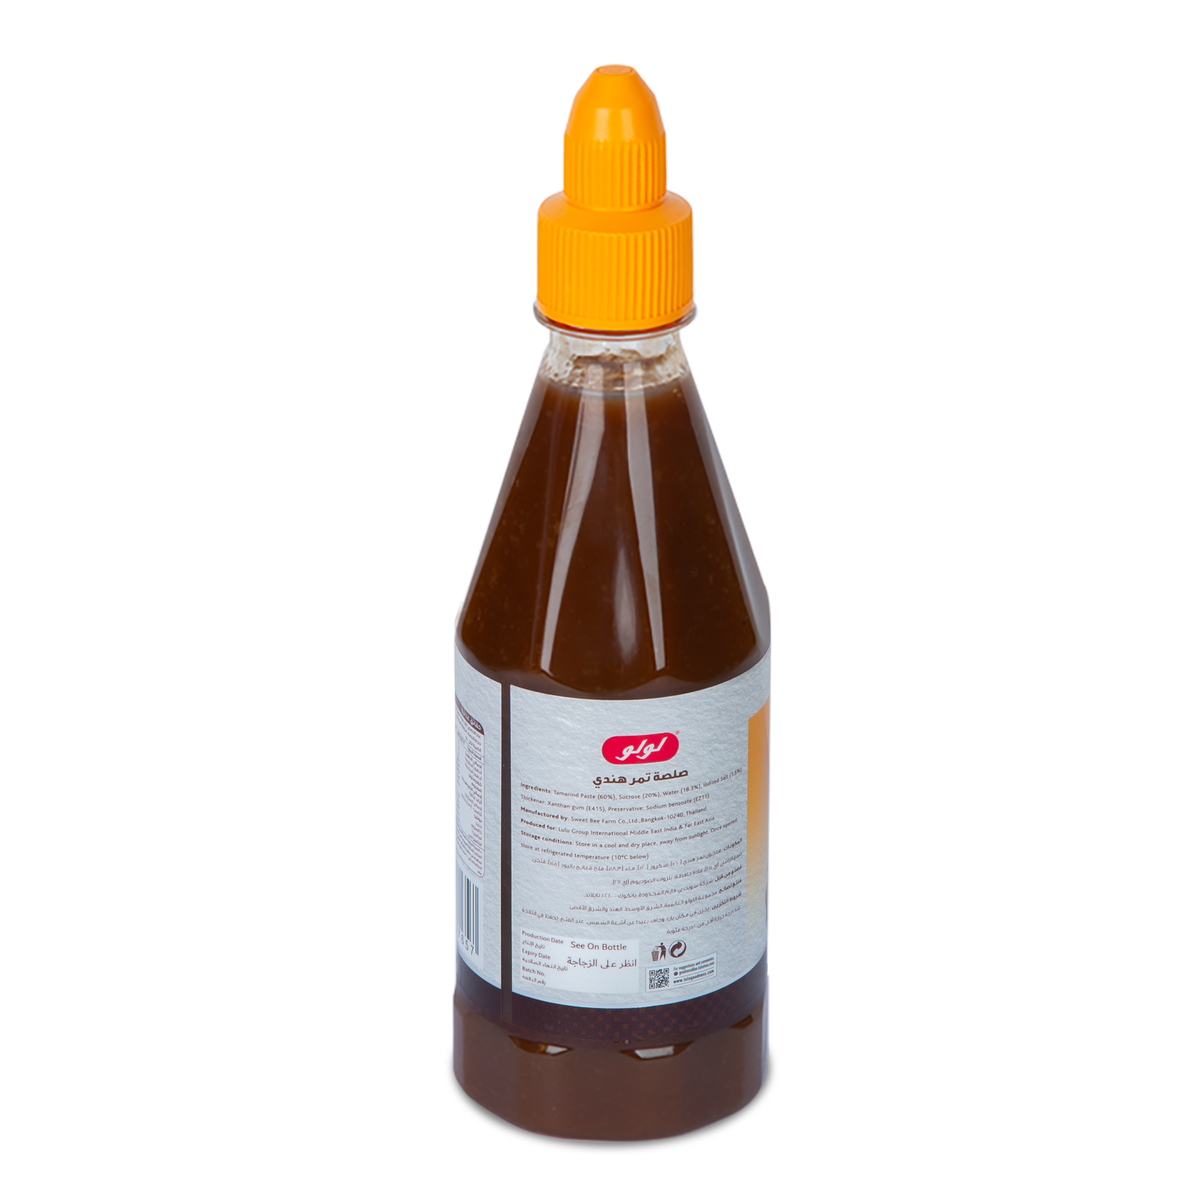 LuLu Tamarind Sauce, 485 g